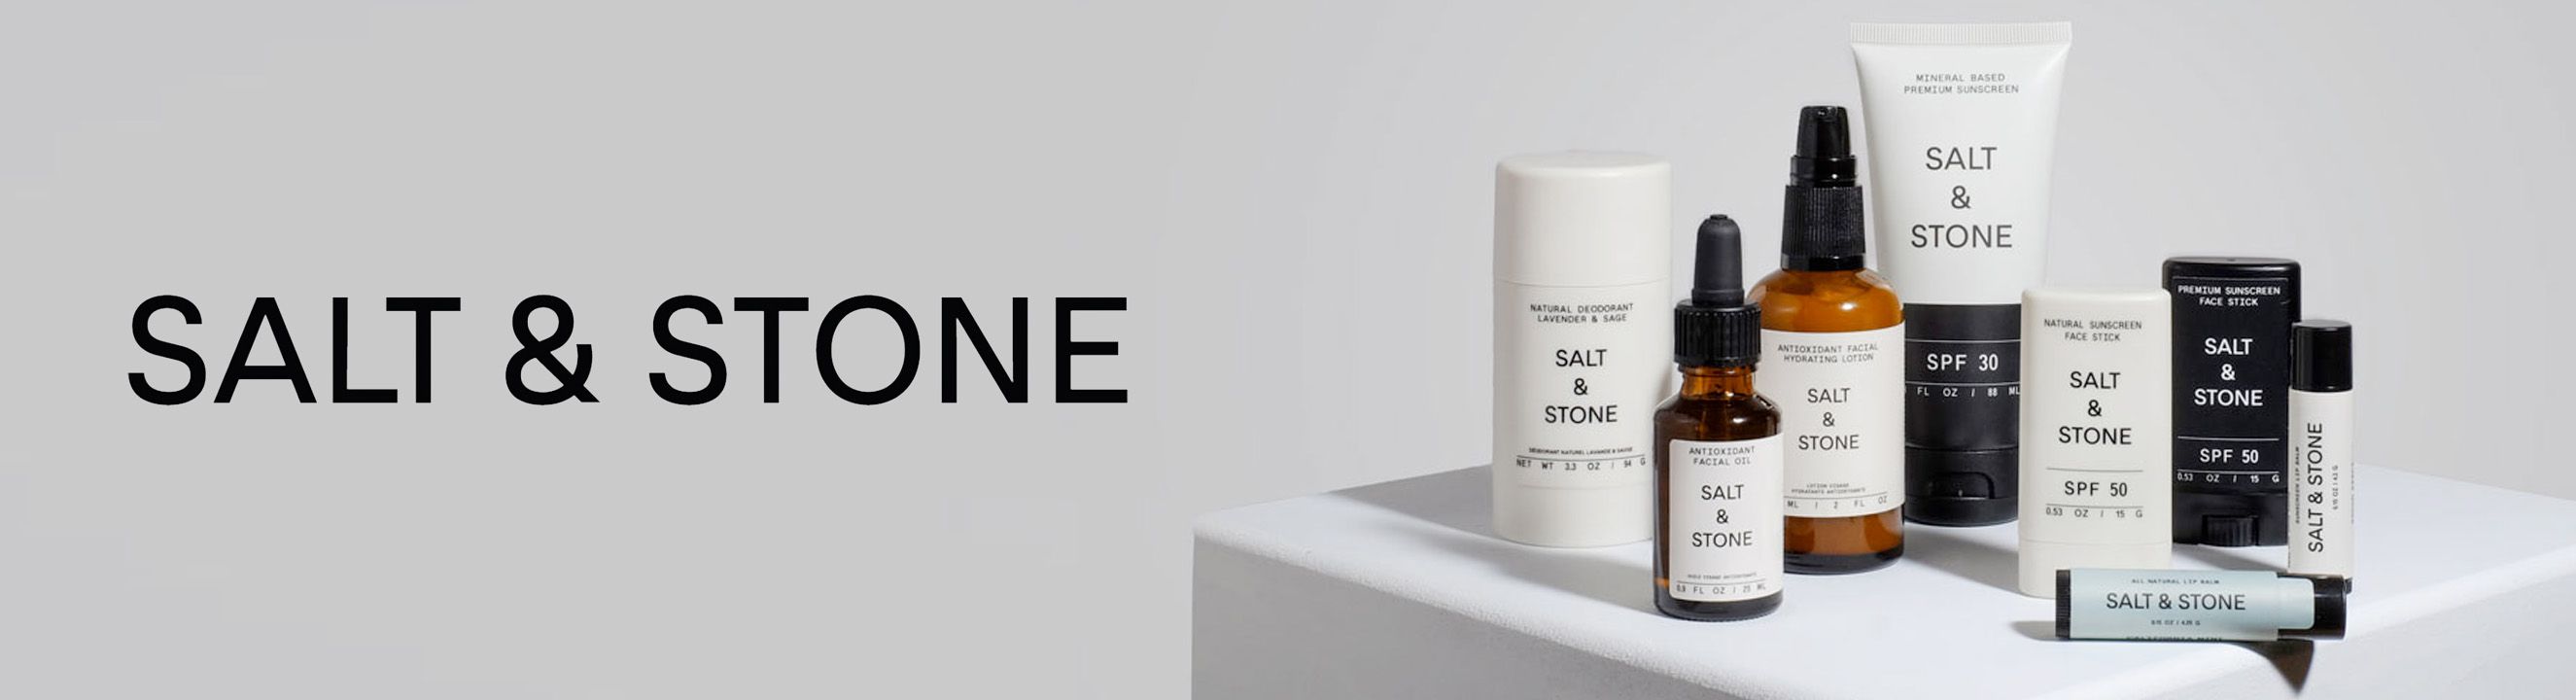 salt-stone-collection